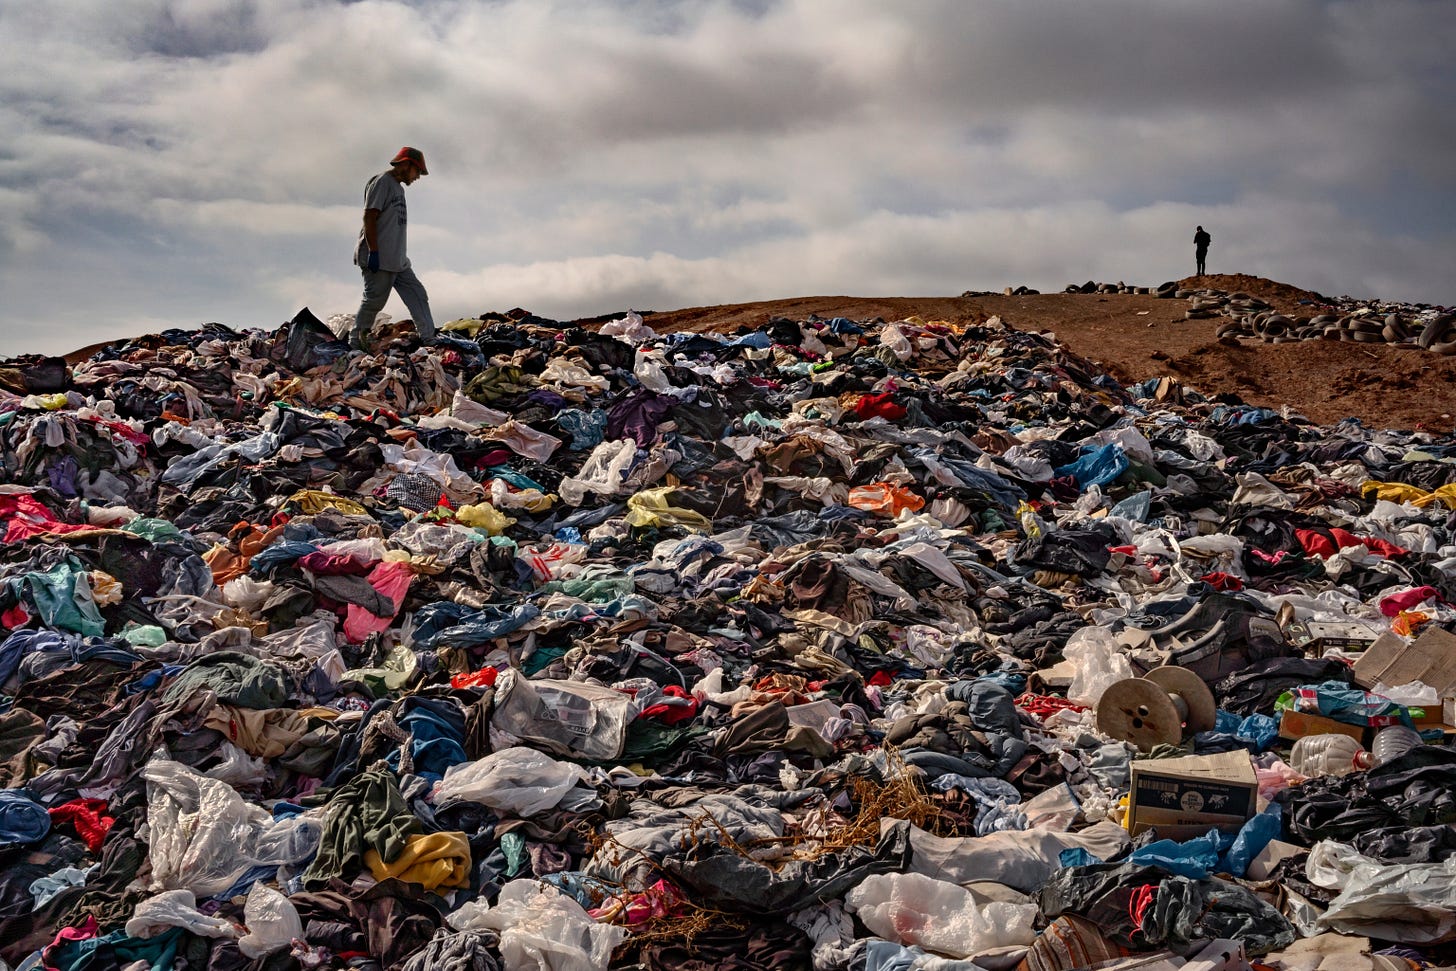 Chile's Atacama Desert has become a fast fashion dumping ground